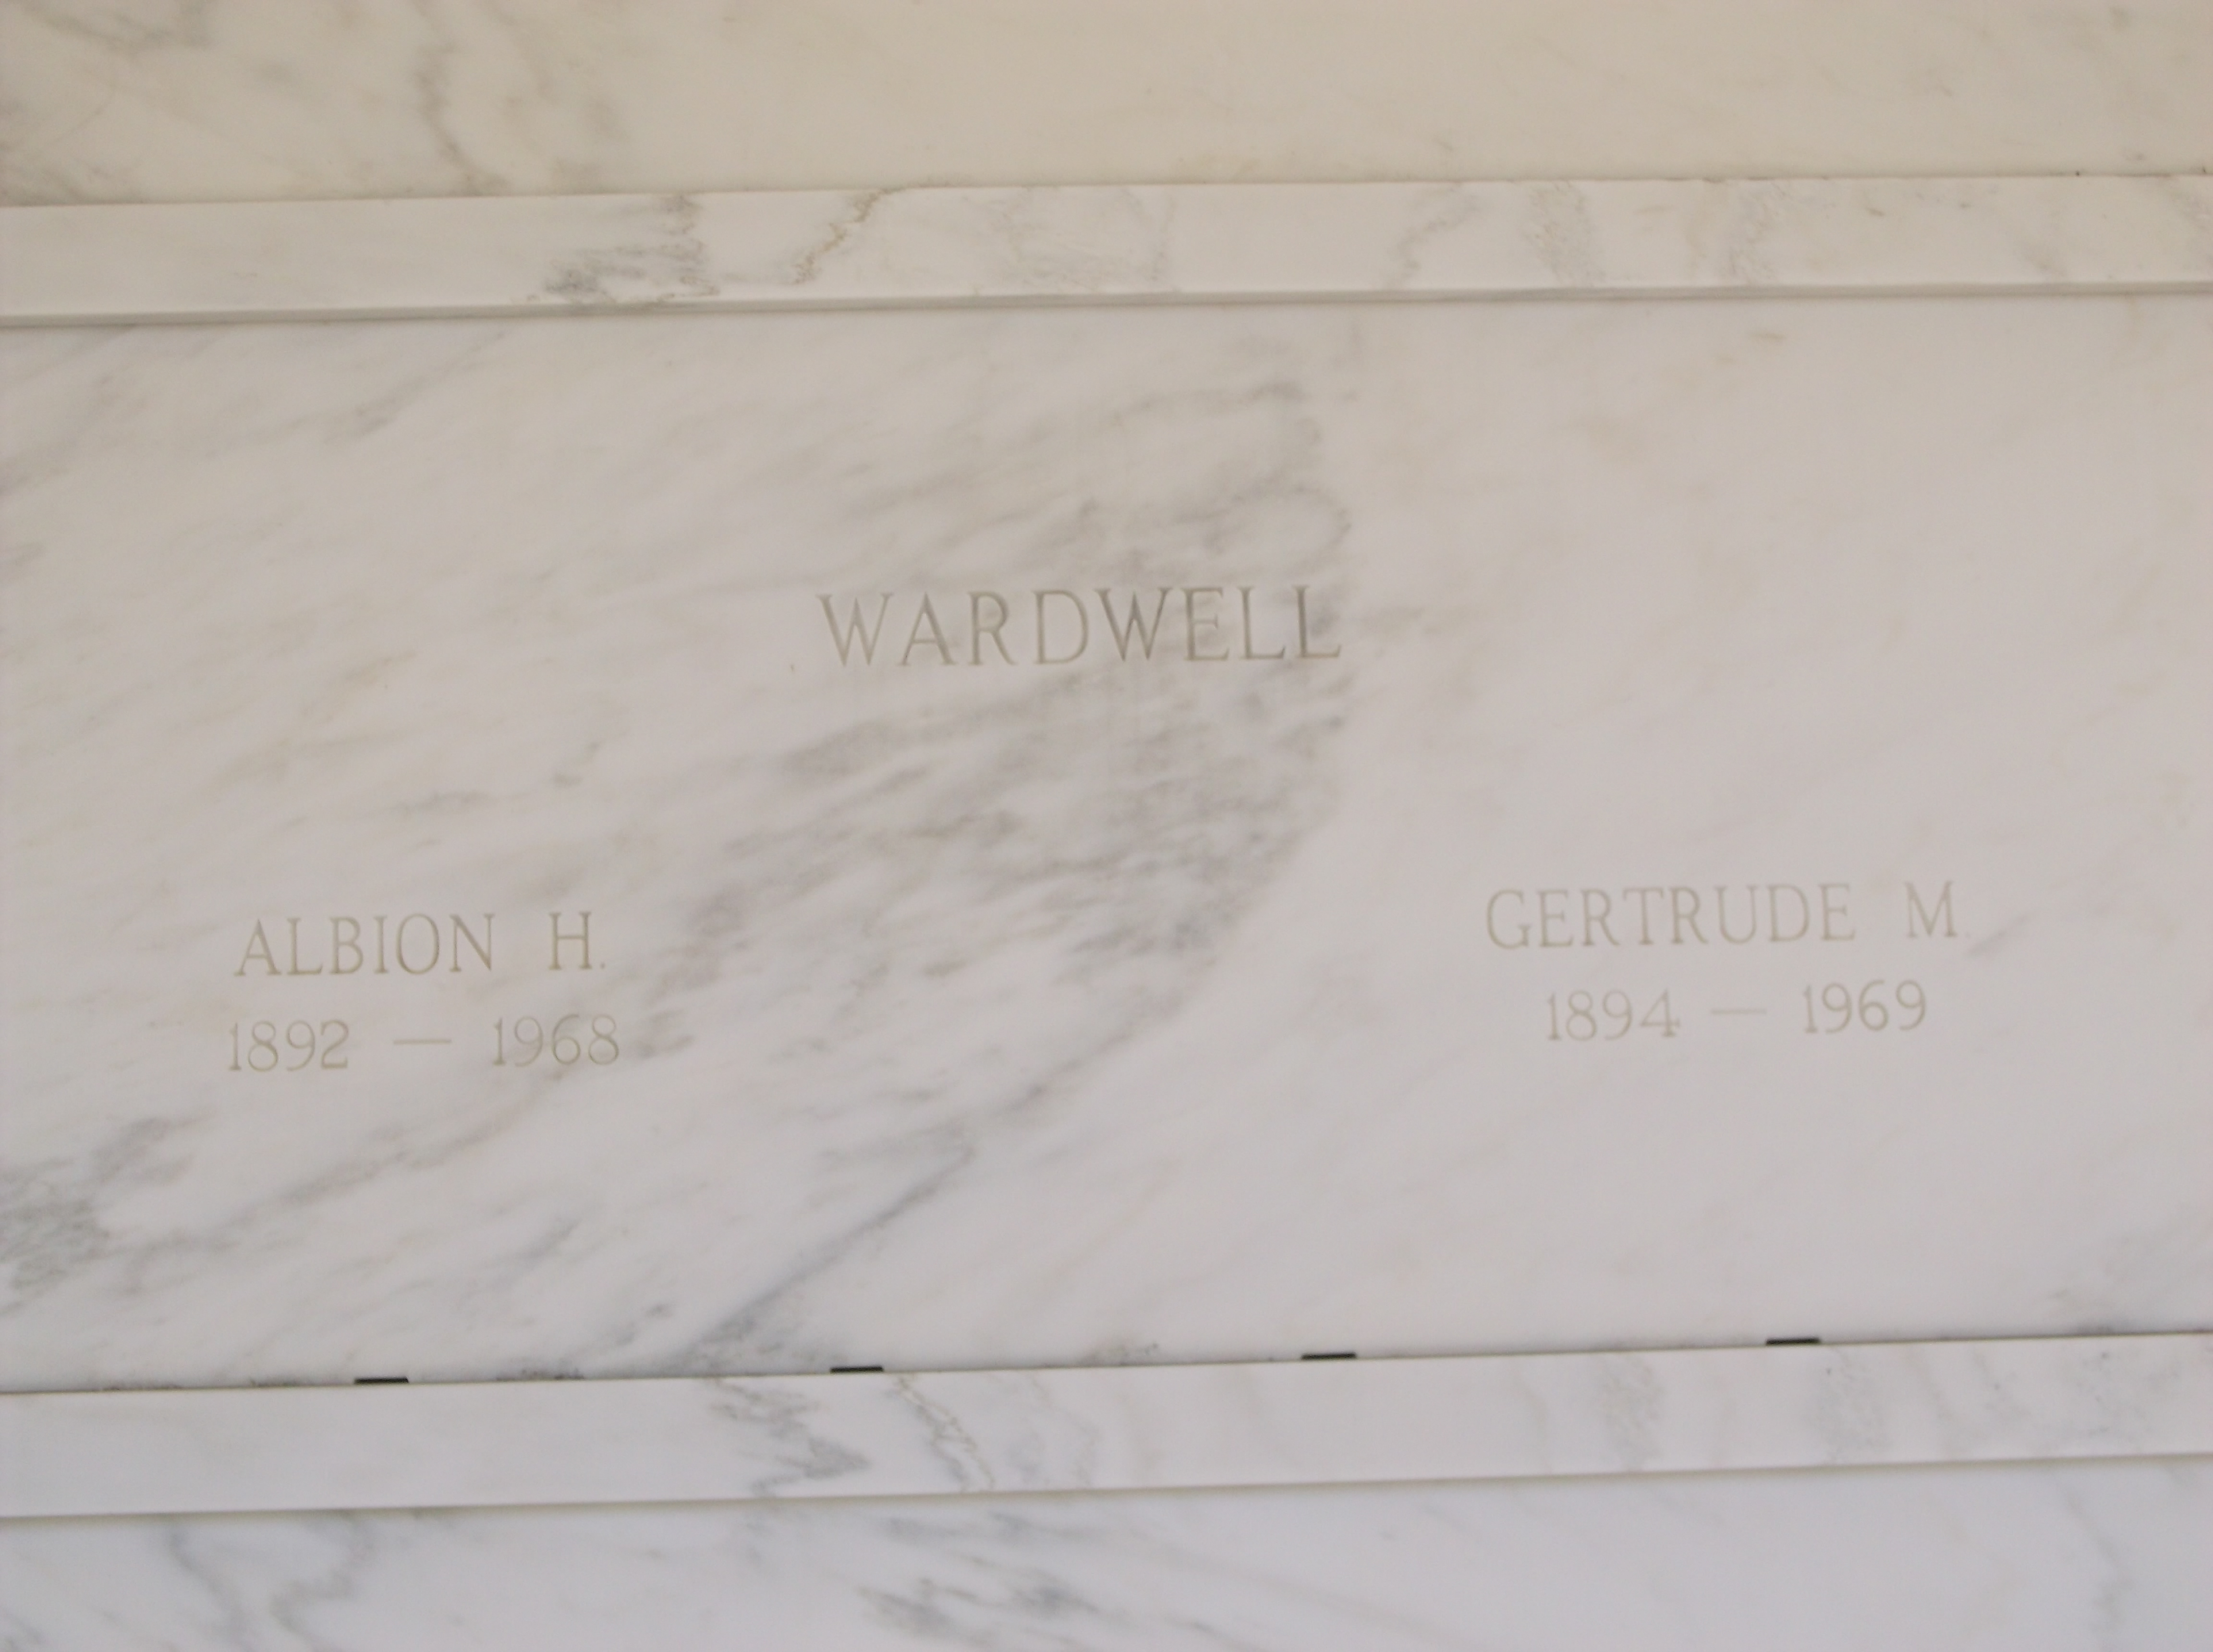 Gertrude M Wardwell